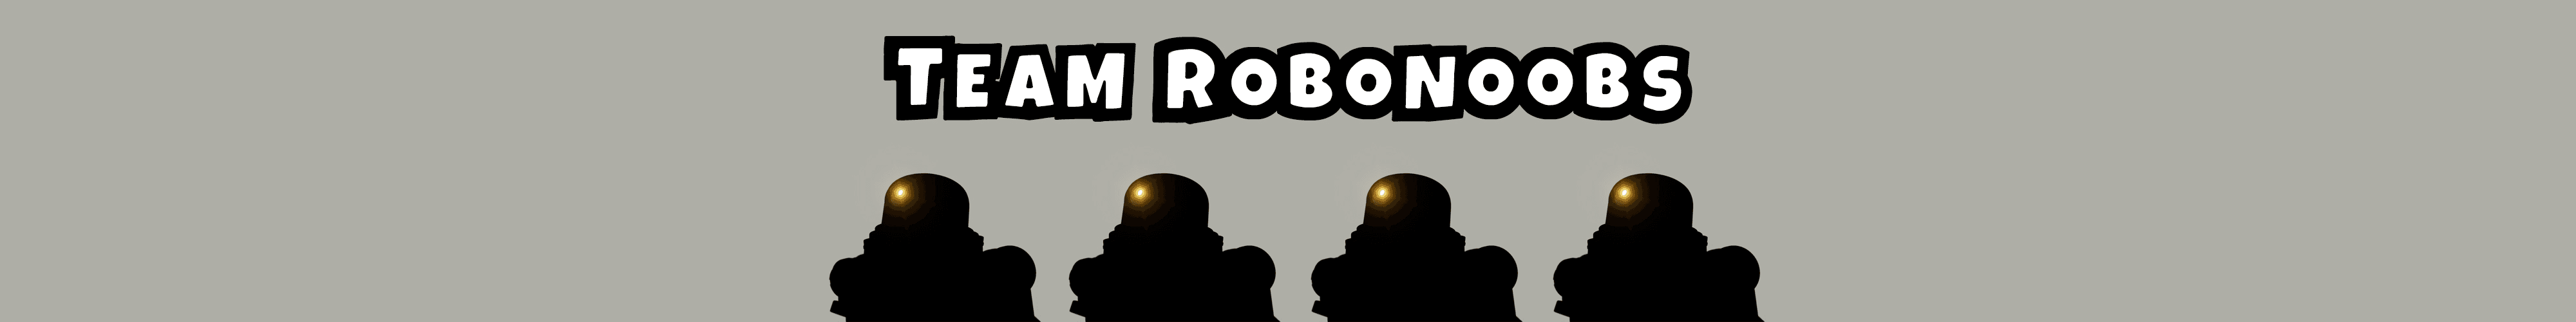 Robonoobs